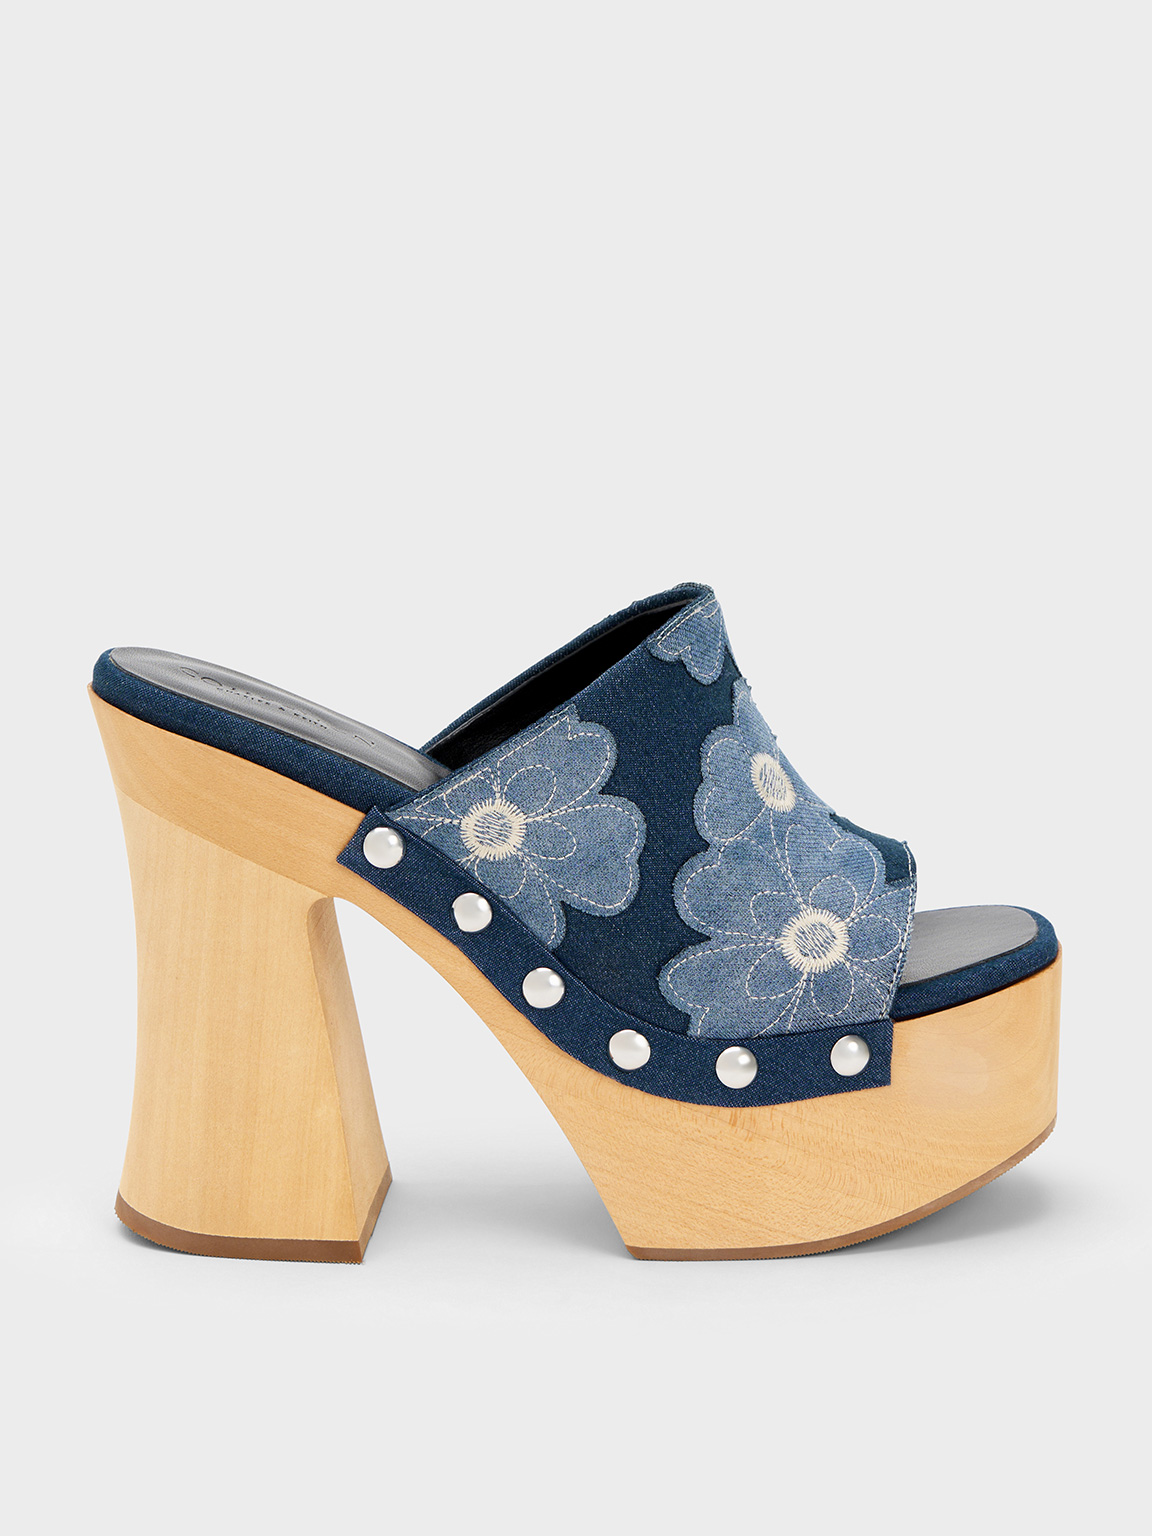 Charles & Keith - Women's Tabitha Floral Denim Platform Clogs, Blue, US 9